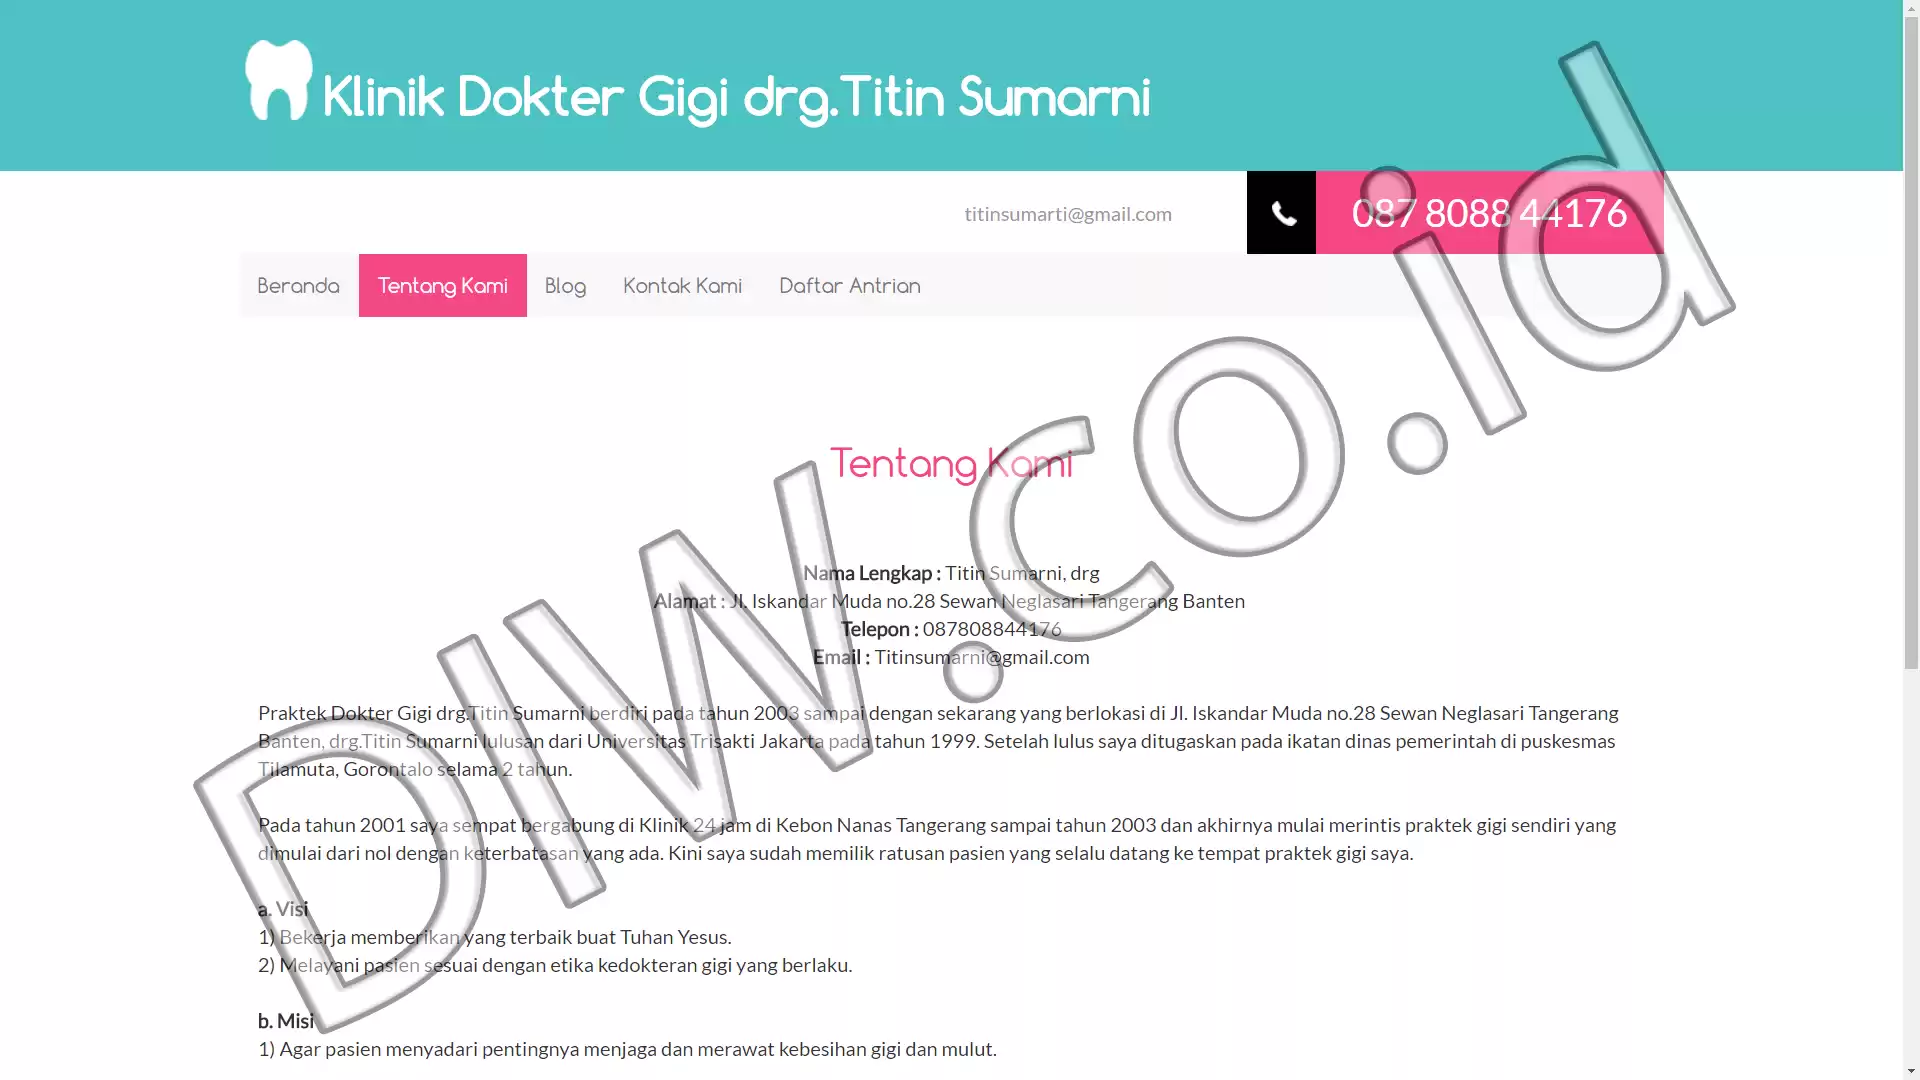 Portfolio - Klinik Dokter Gigi Drg Titin Sumarni - DIW.co.id (Digital In Website) Jasa Pembuatan Website dan Program Skripsi